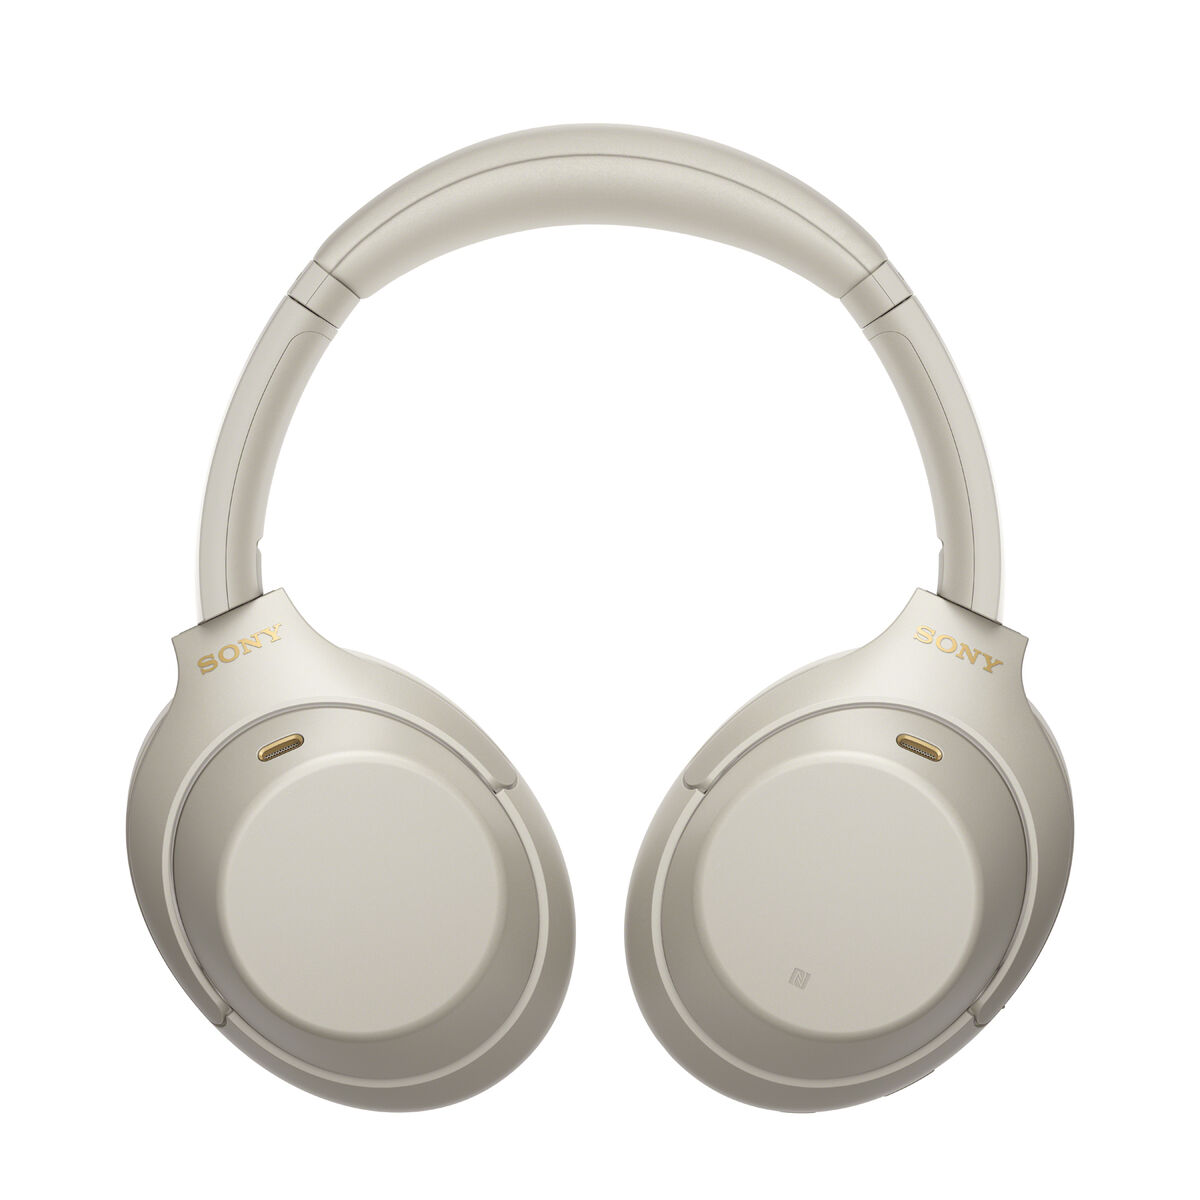 Auscultadores Bluetooth Sony Wh-1000xm4 - Headphones sem fio | Sport Zone MKP